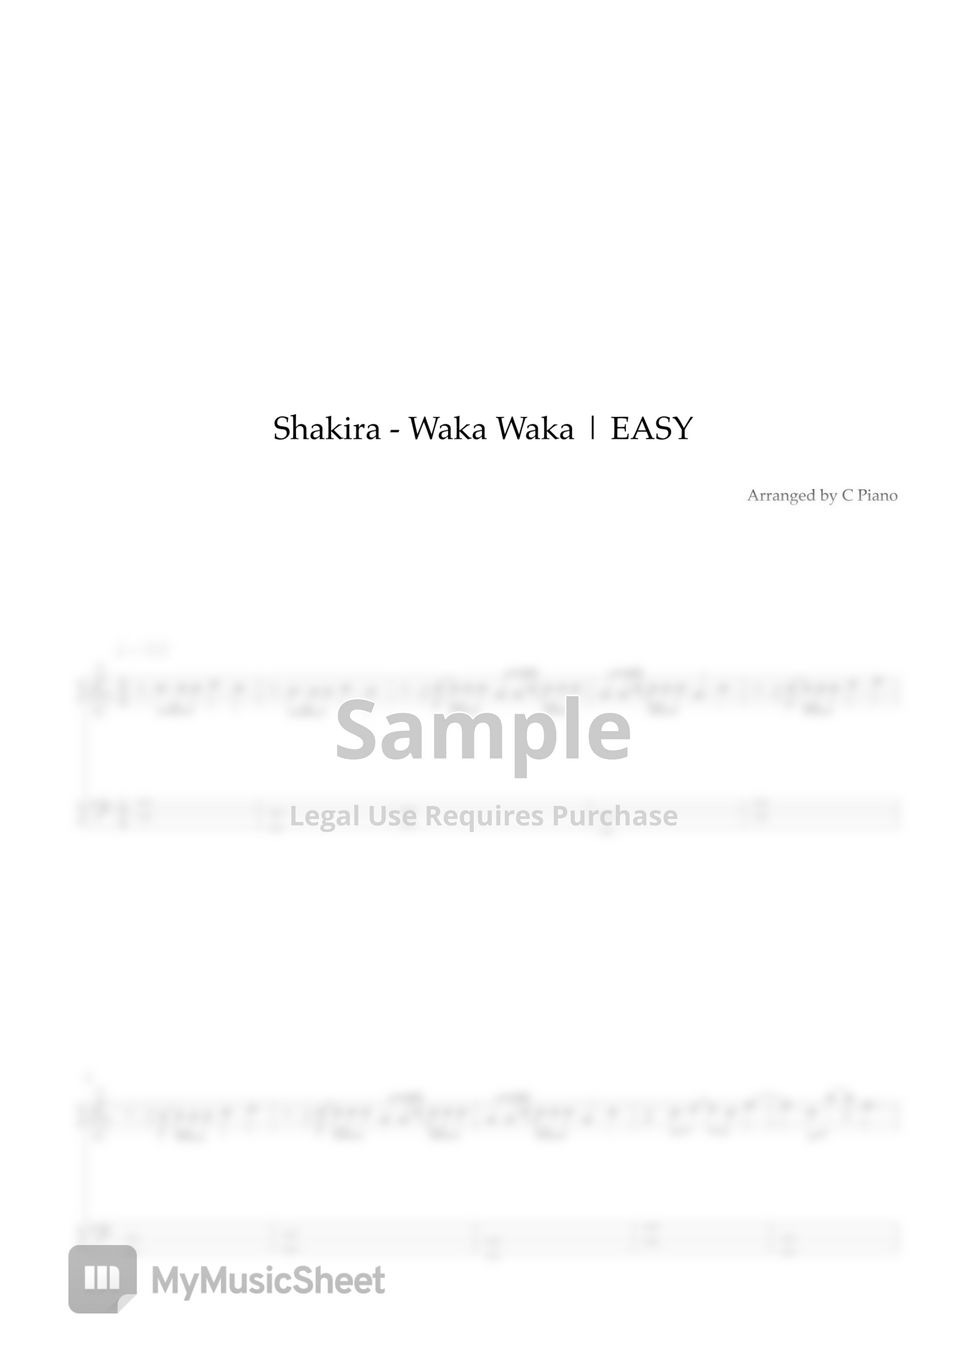 Shakira - Waka Waka (Easy Version) by C Piano